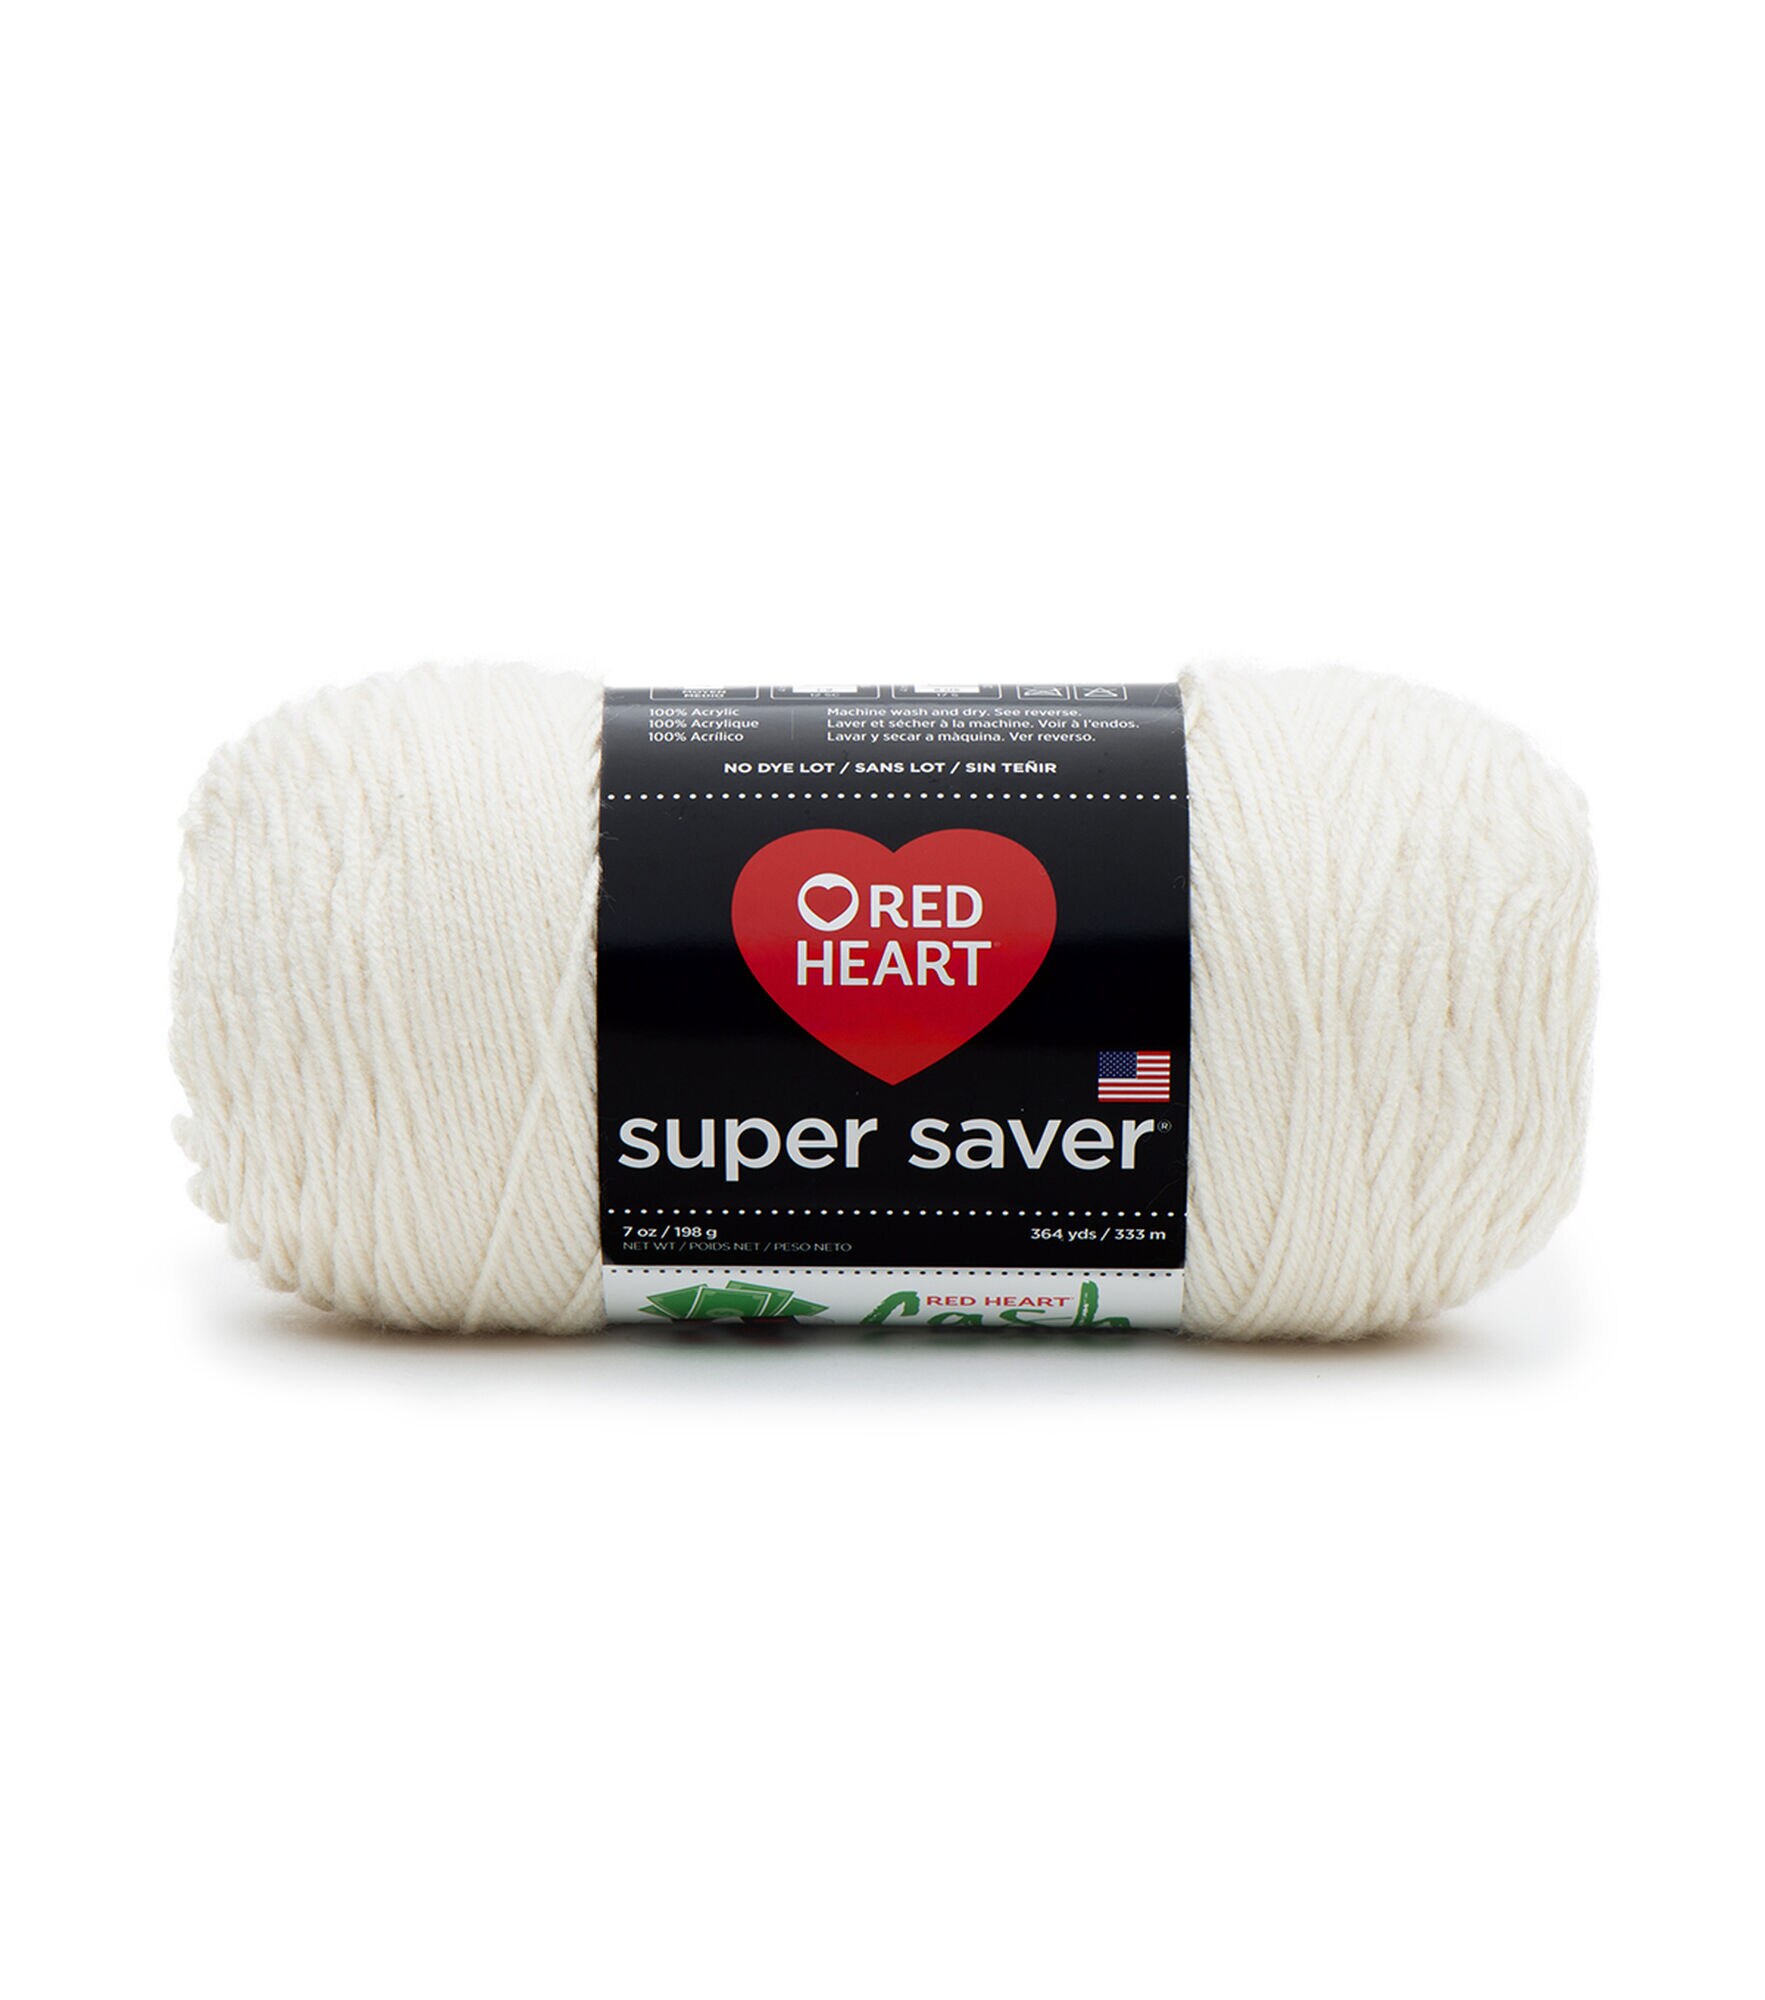 Red Heart Super Saver #4 Medium Acrylic Yarn, Soft White 7oz/198g, 364 Yards (9 Pack), Size: Medium (4)